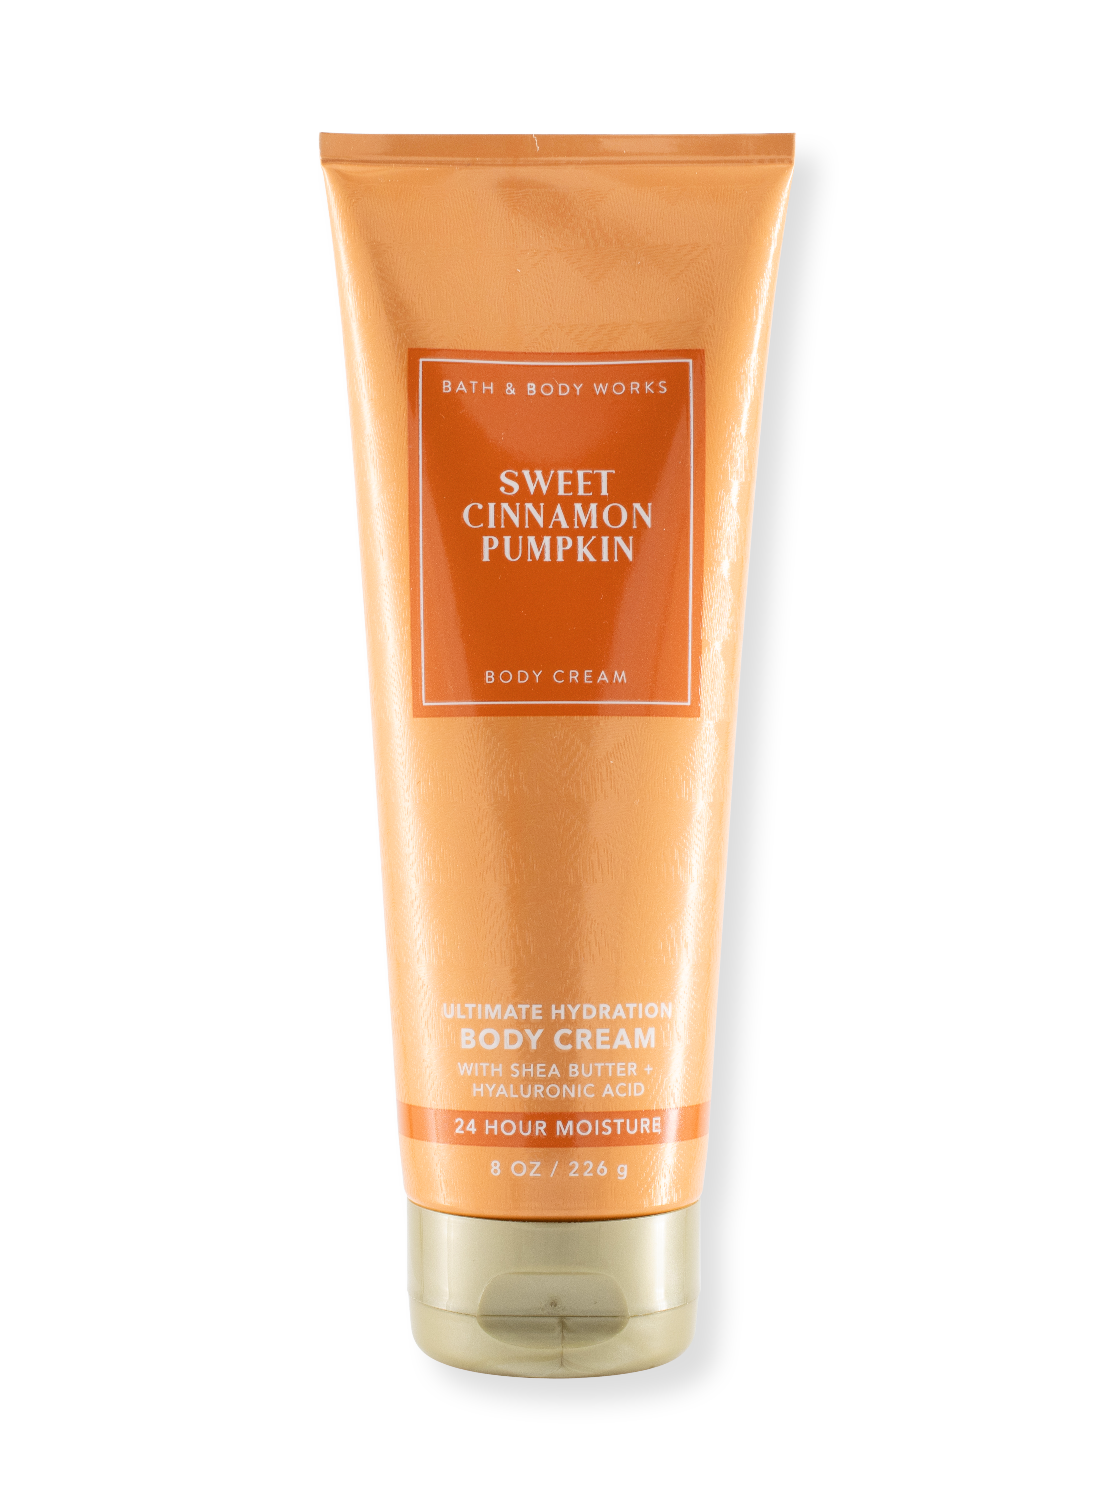 Body Cream - Sweet Cinnamon Pumpkin -  226g